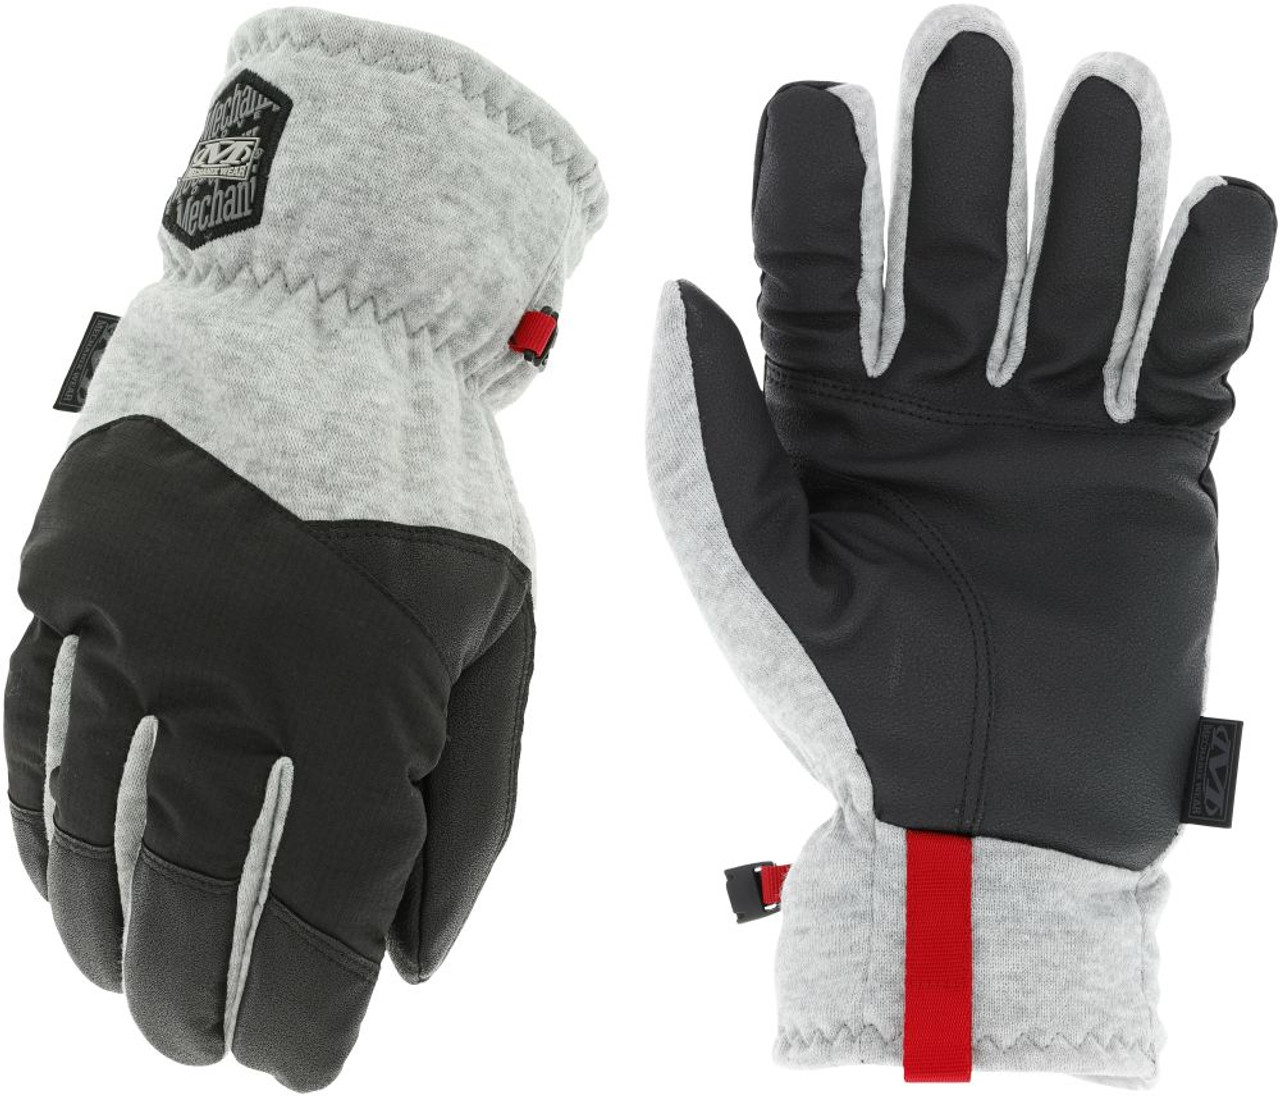 Mechanix Wear COLDWORK CWKG-58 Work Mechanics Gloves - Pair